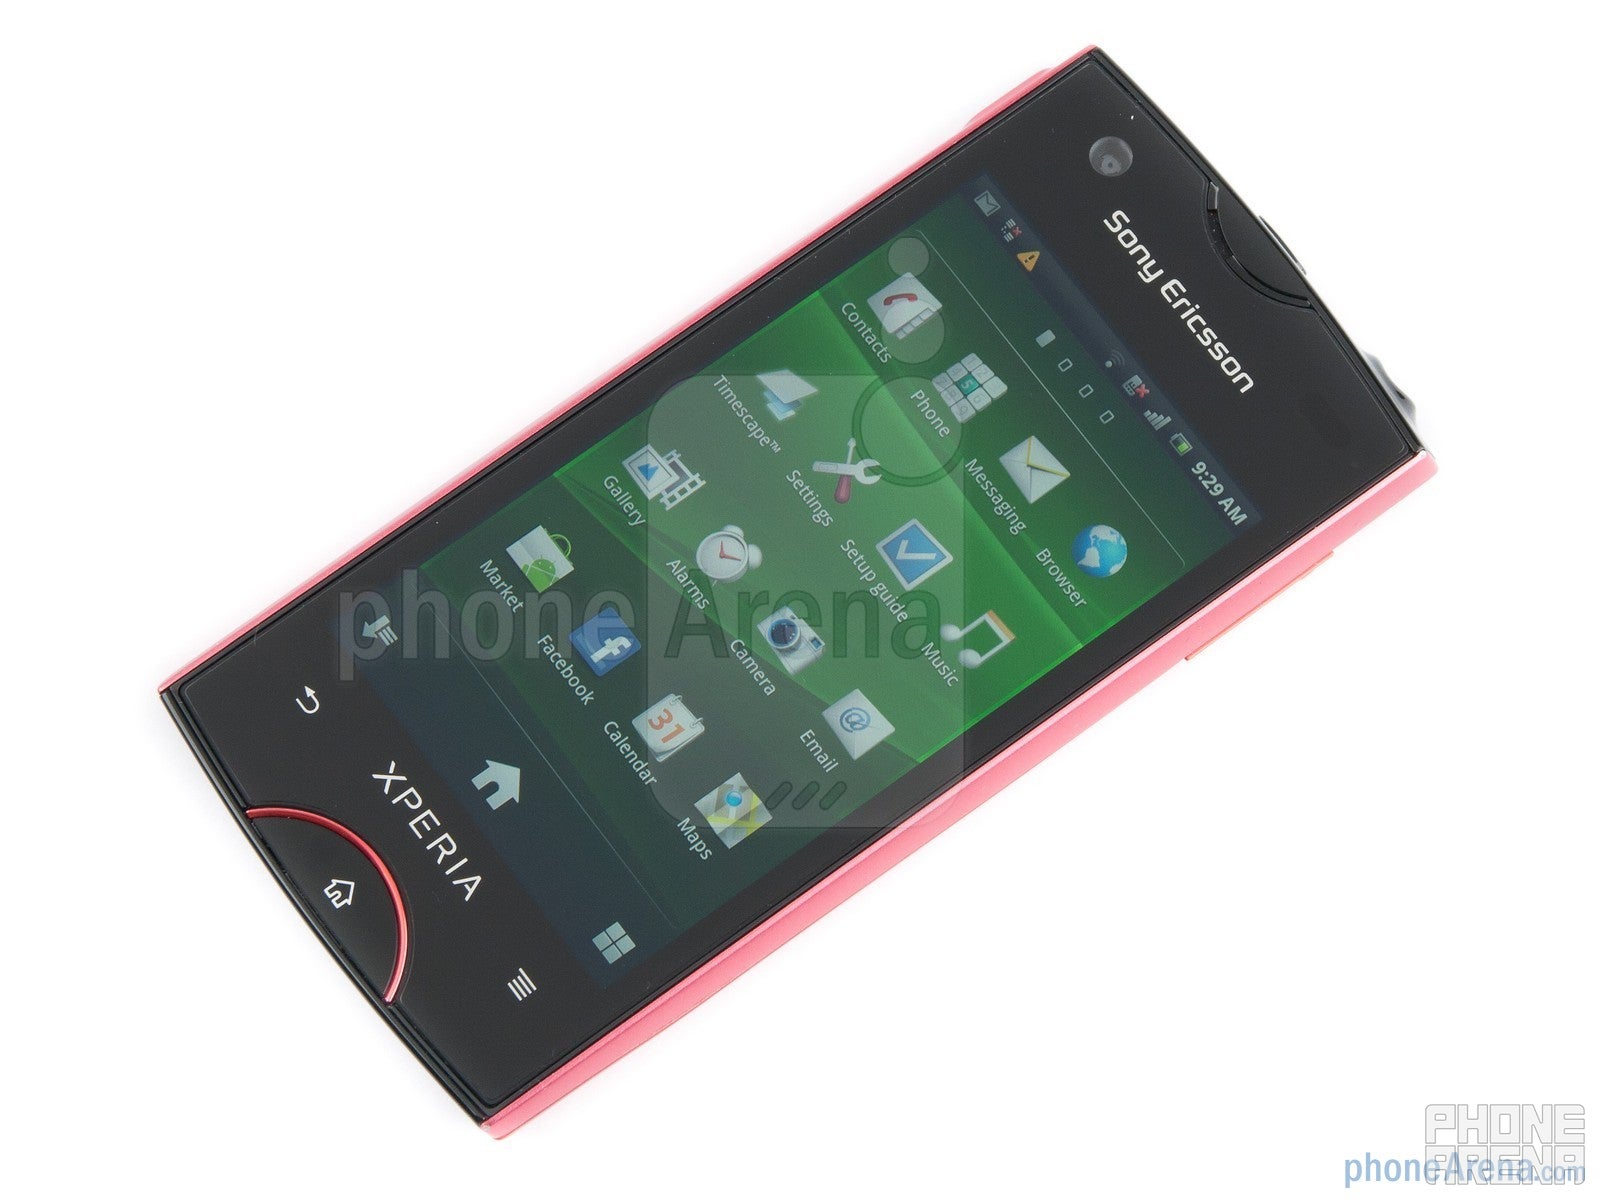 Sony Ericsson Xperia ray Review